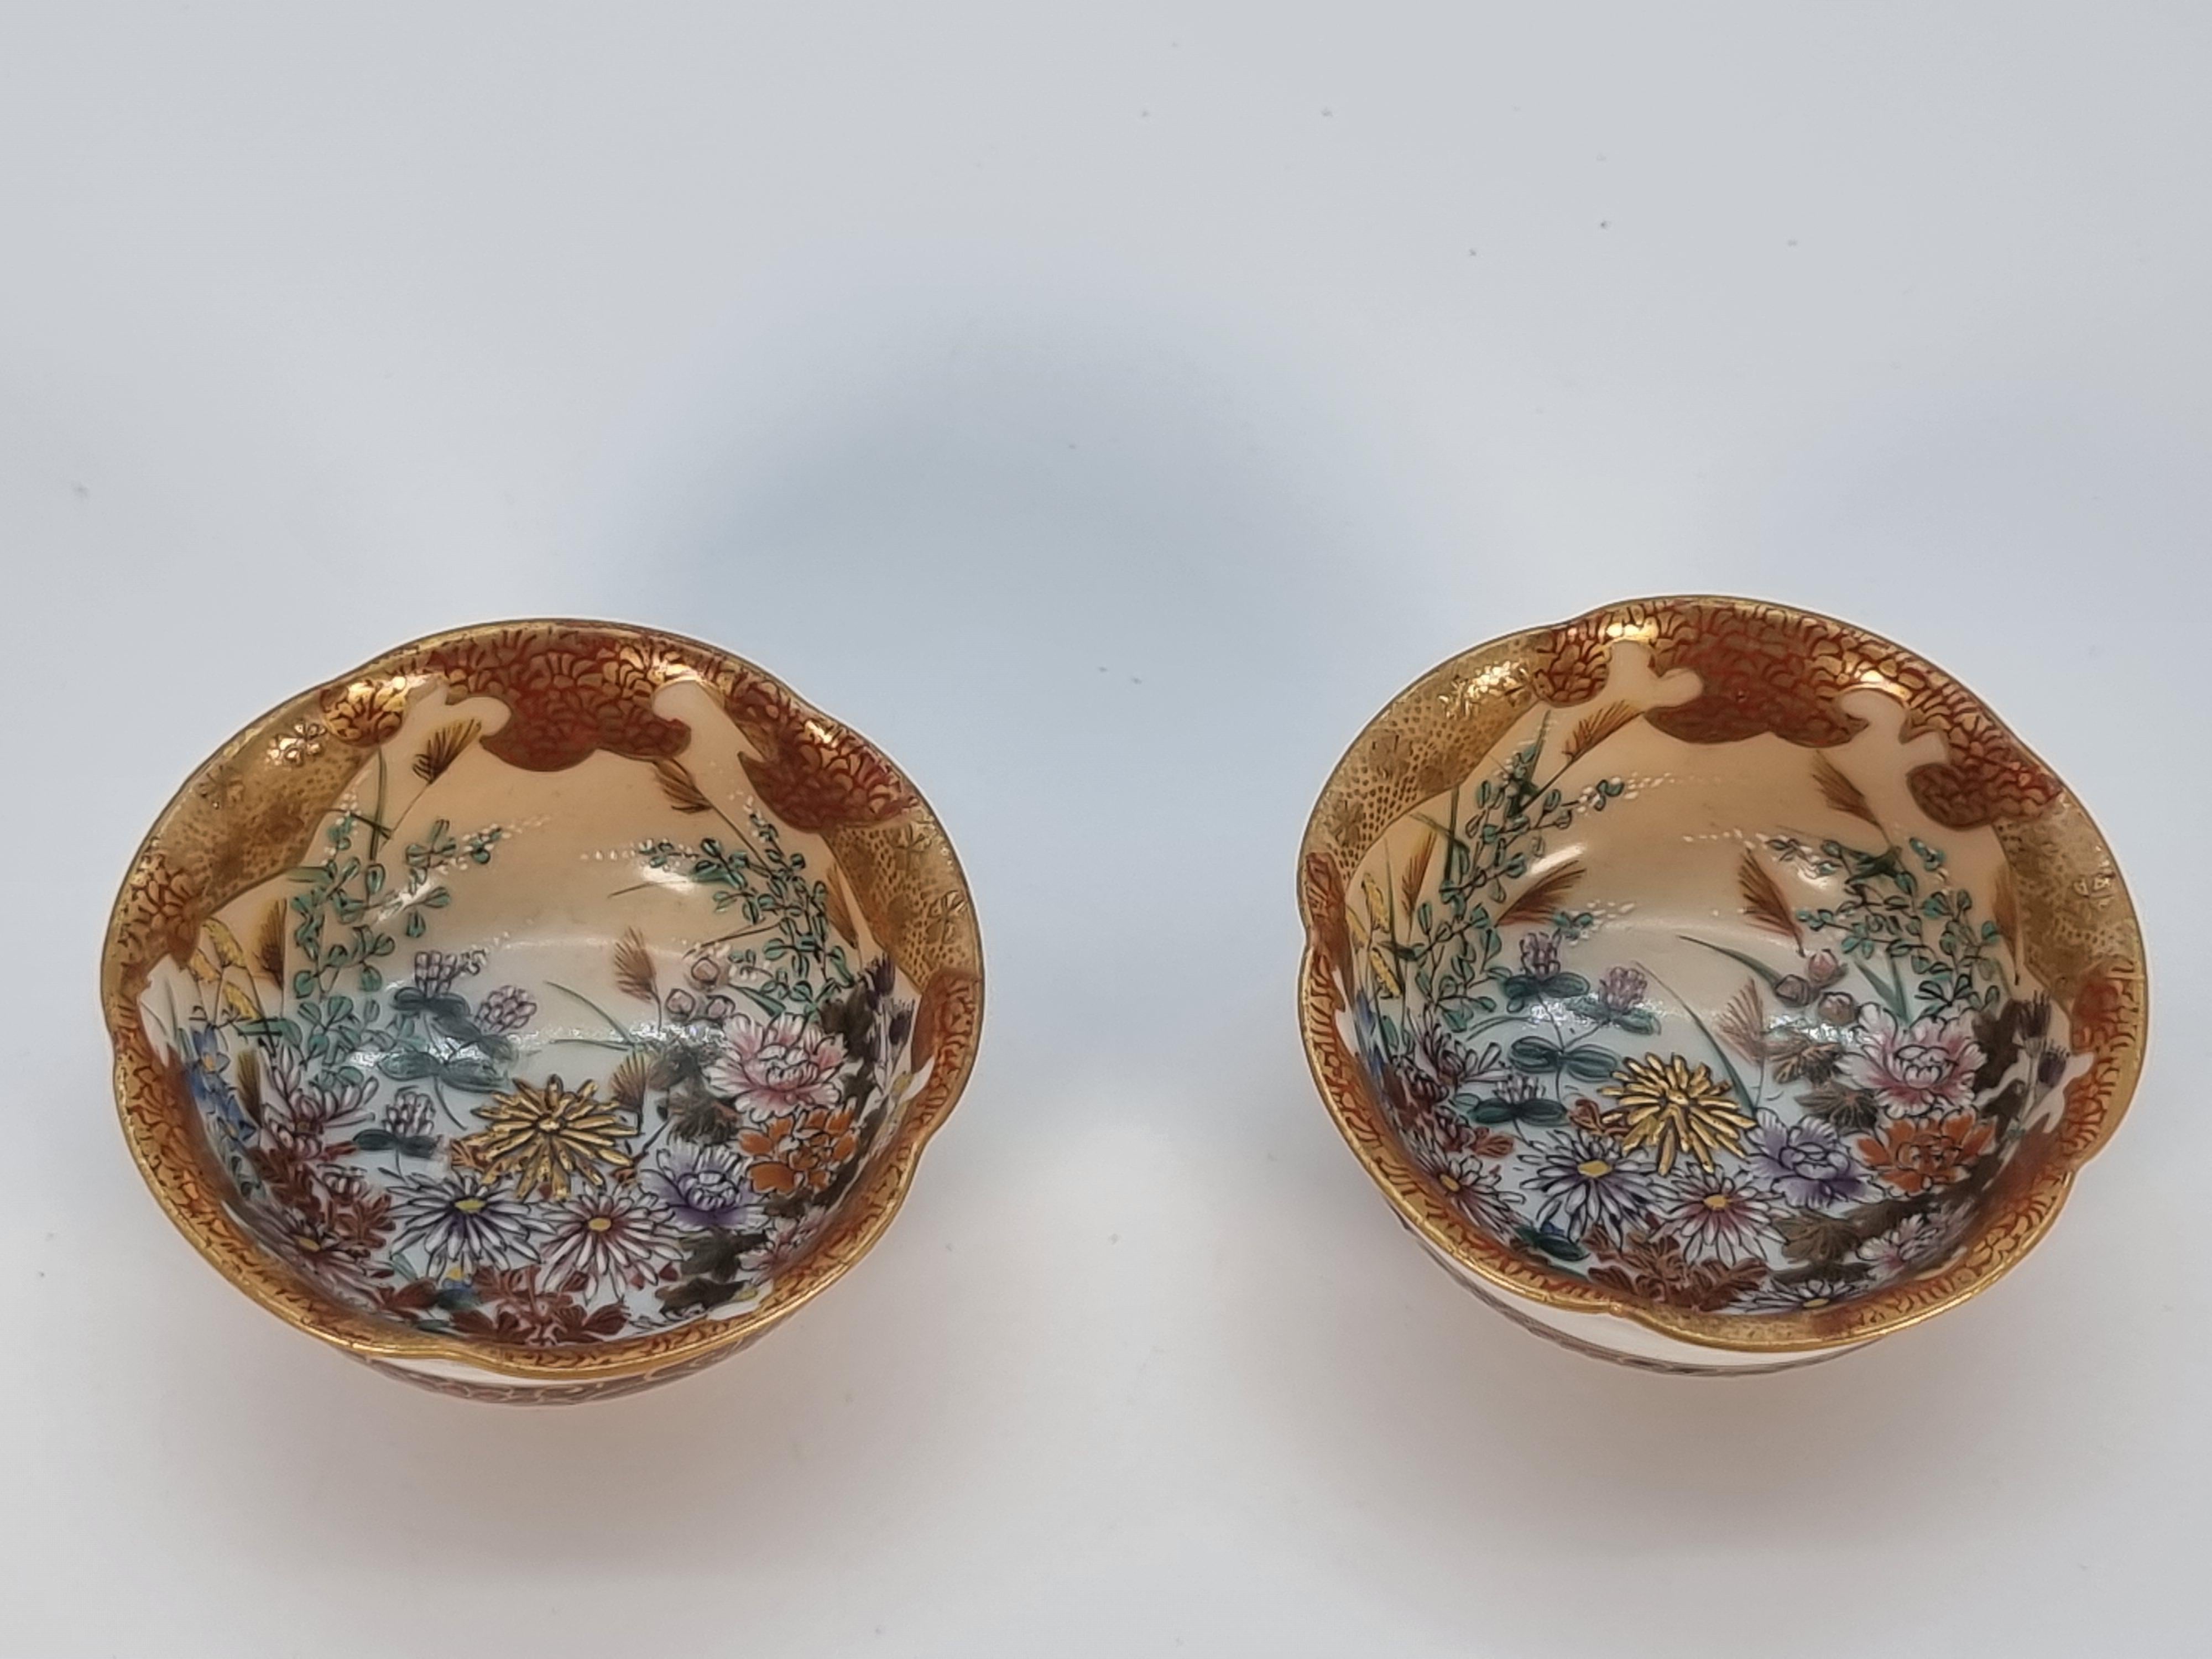 Zwei japanische Miniatur-Porzellanschalen aus der Meiji-Periode (19. Jh.) aus Kutani-Ware (Handbemalt) im Angebot